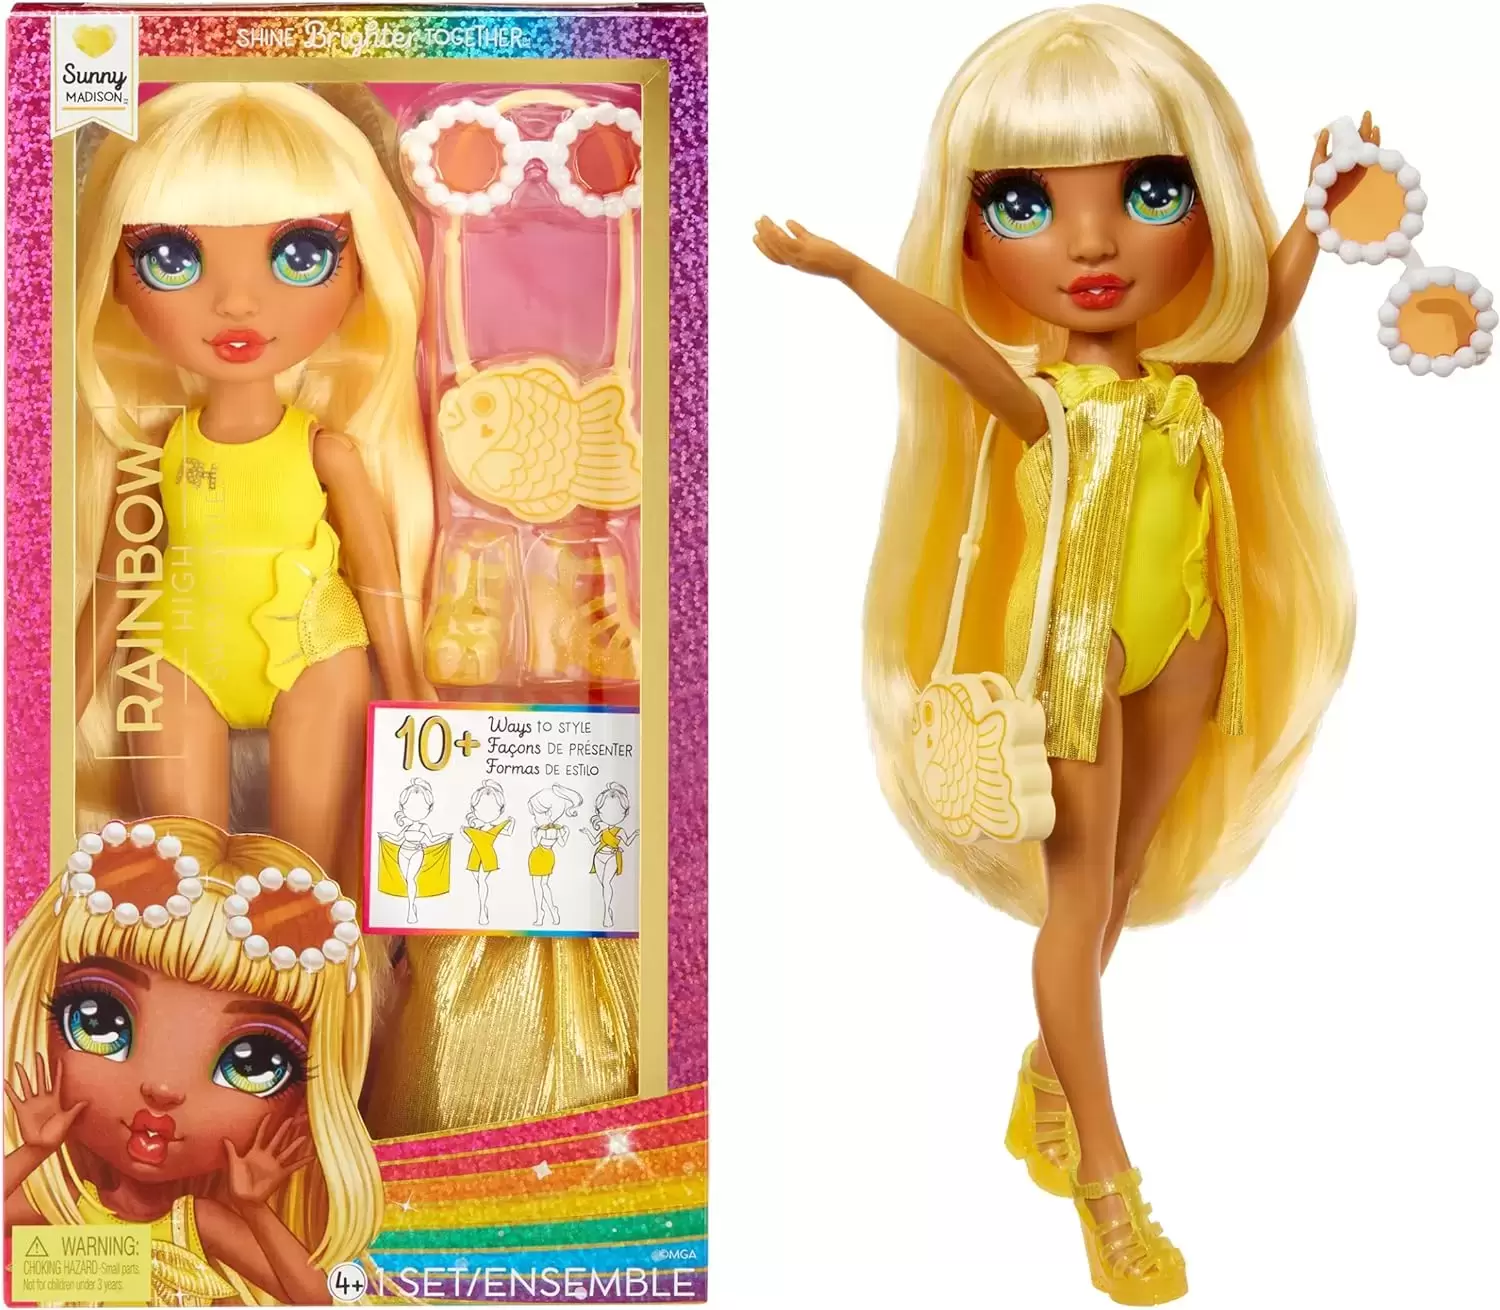 Sunny Madison - Swim & Style - Rainbow High doll